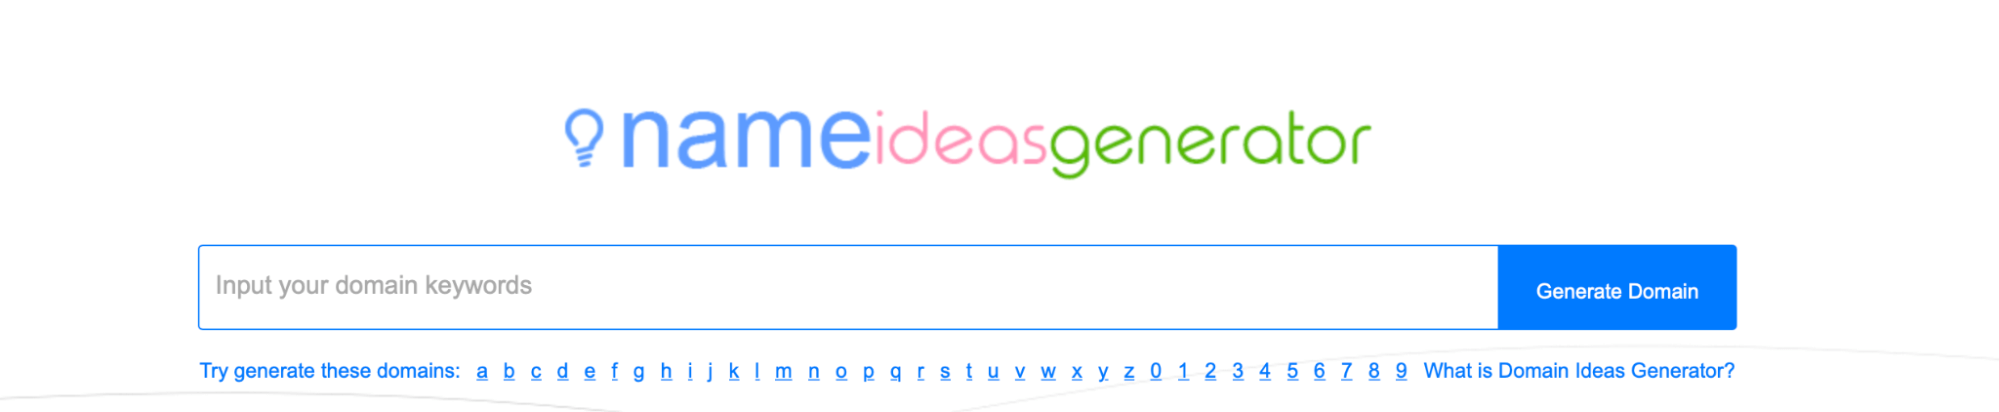 Name Ideas Generator website